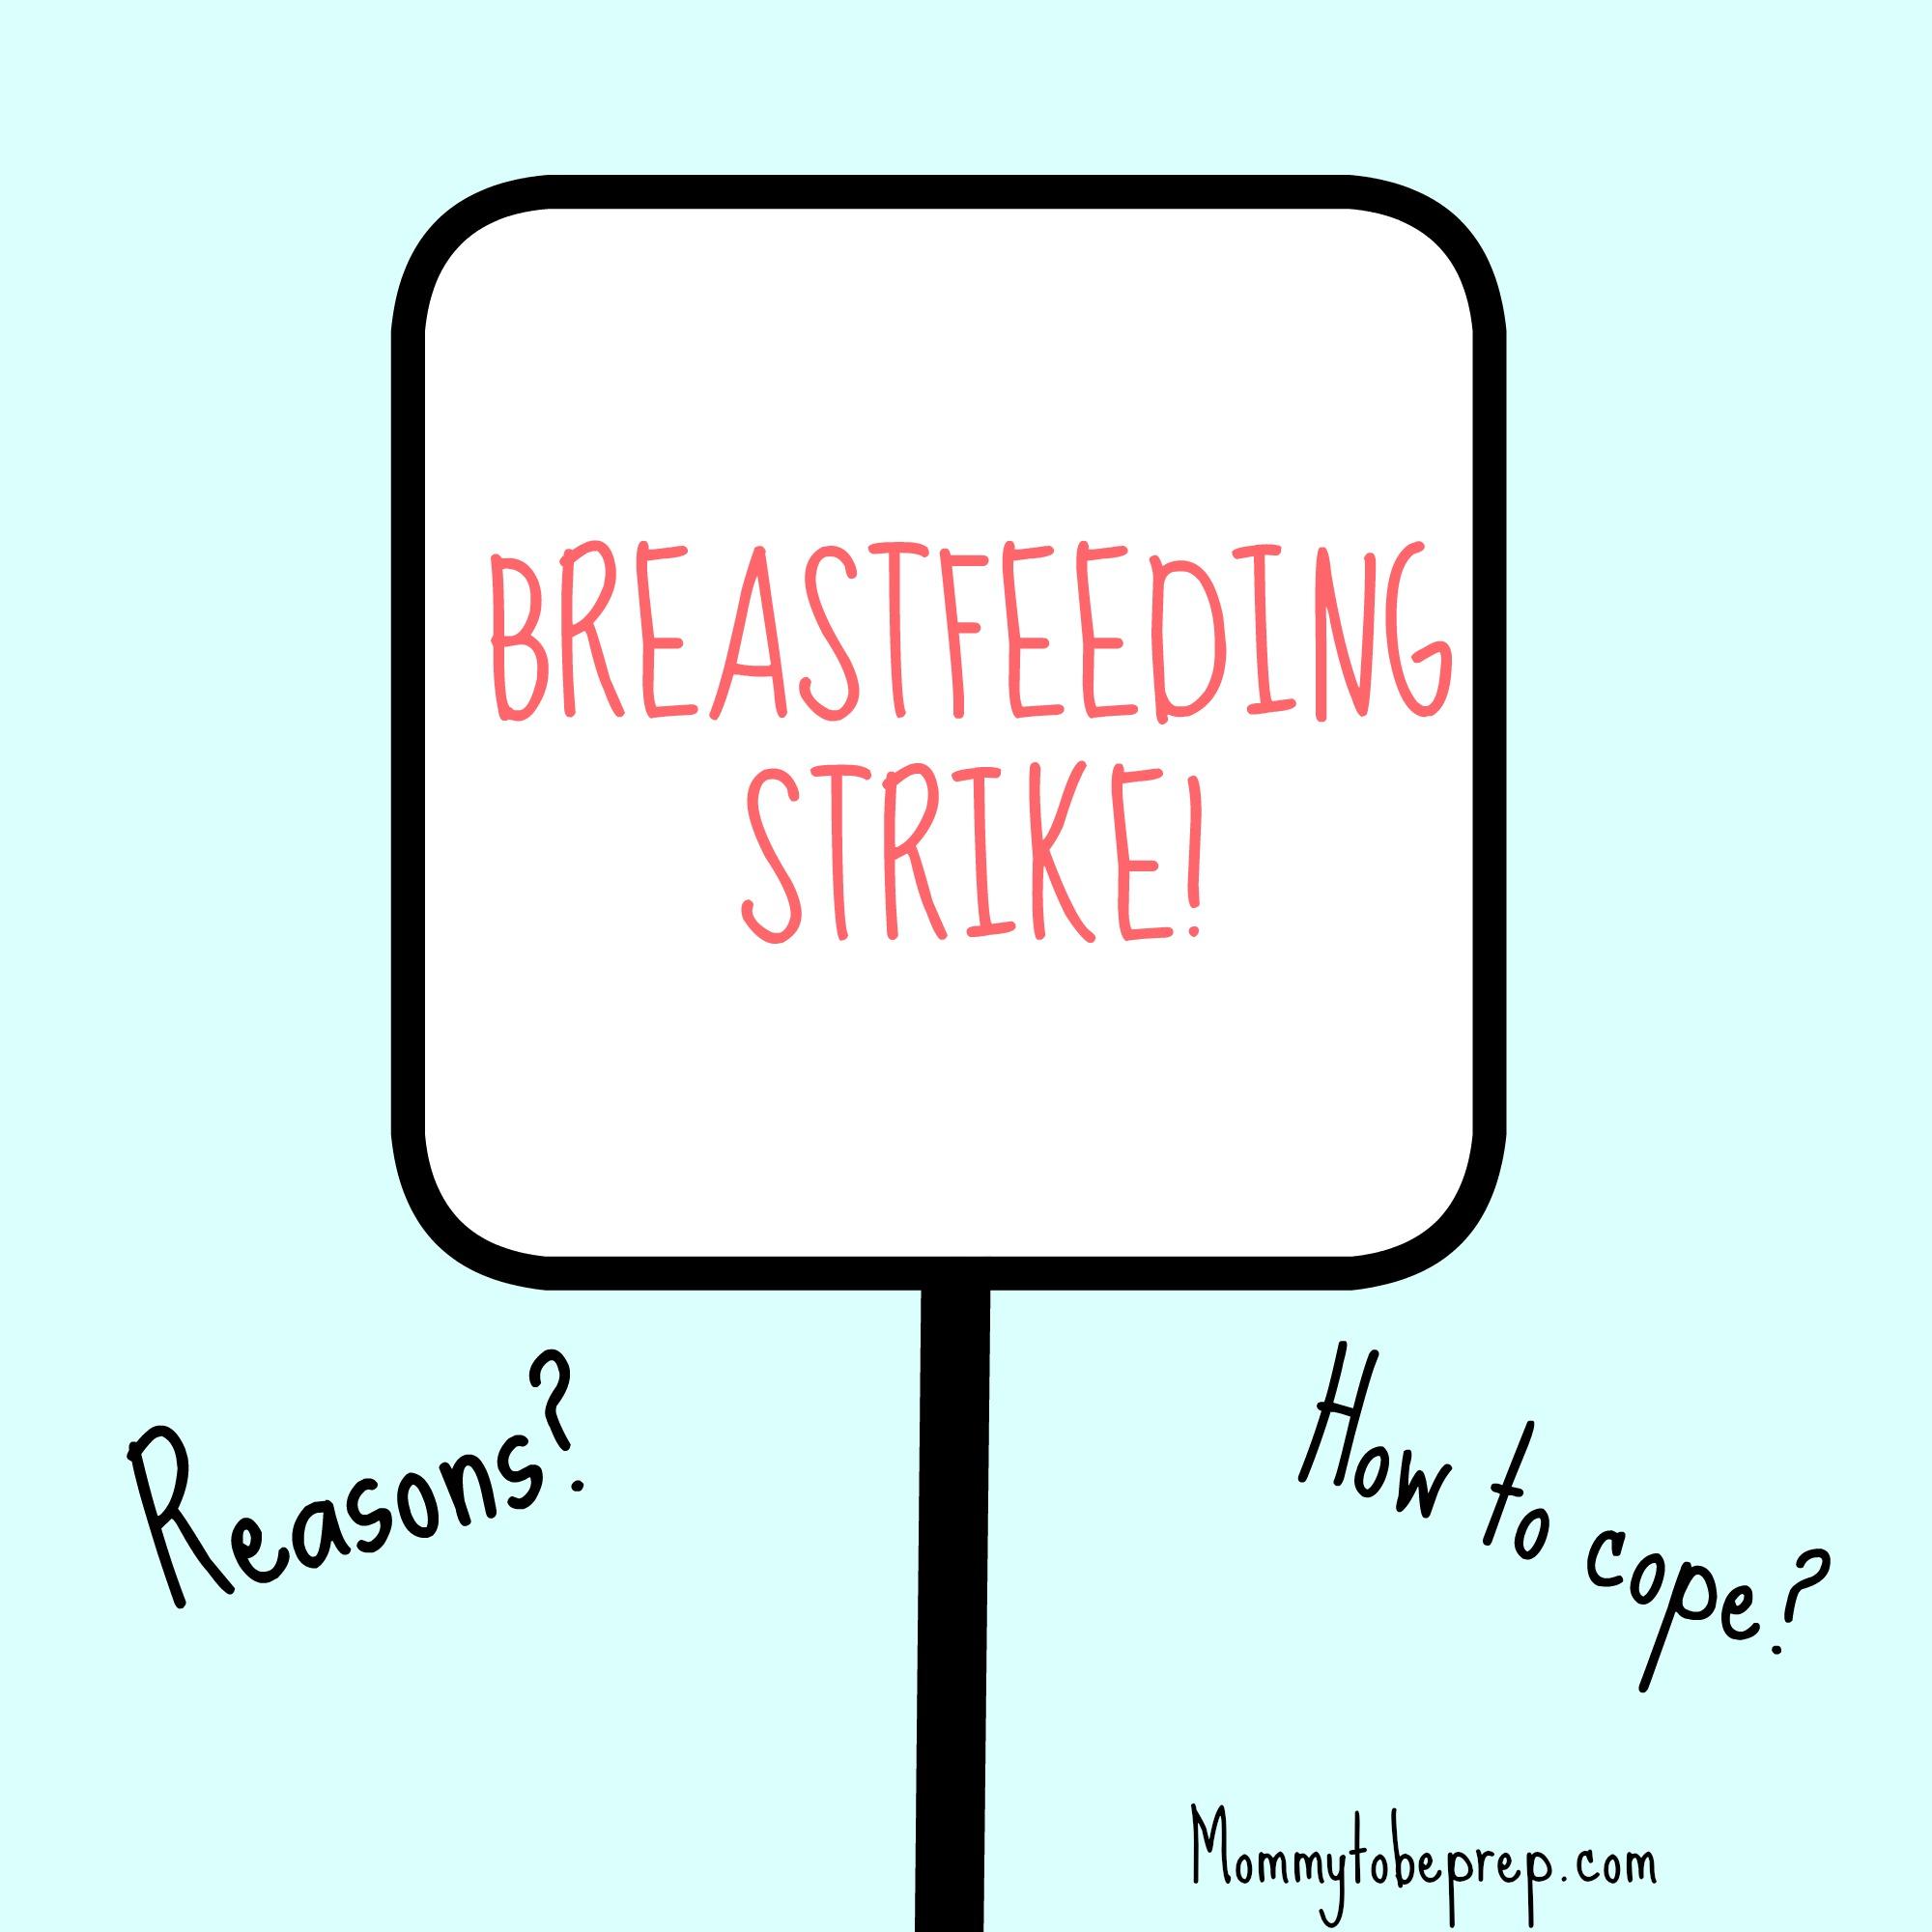 Breastfeeding Strike